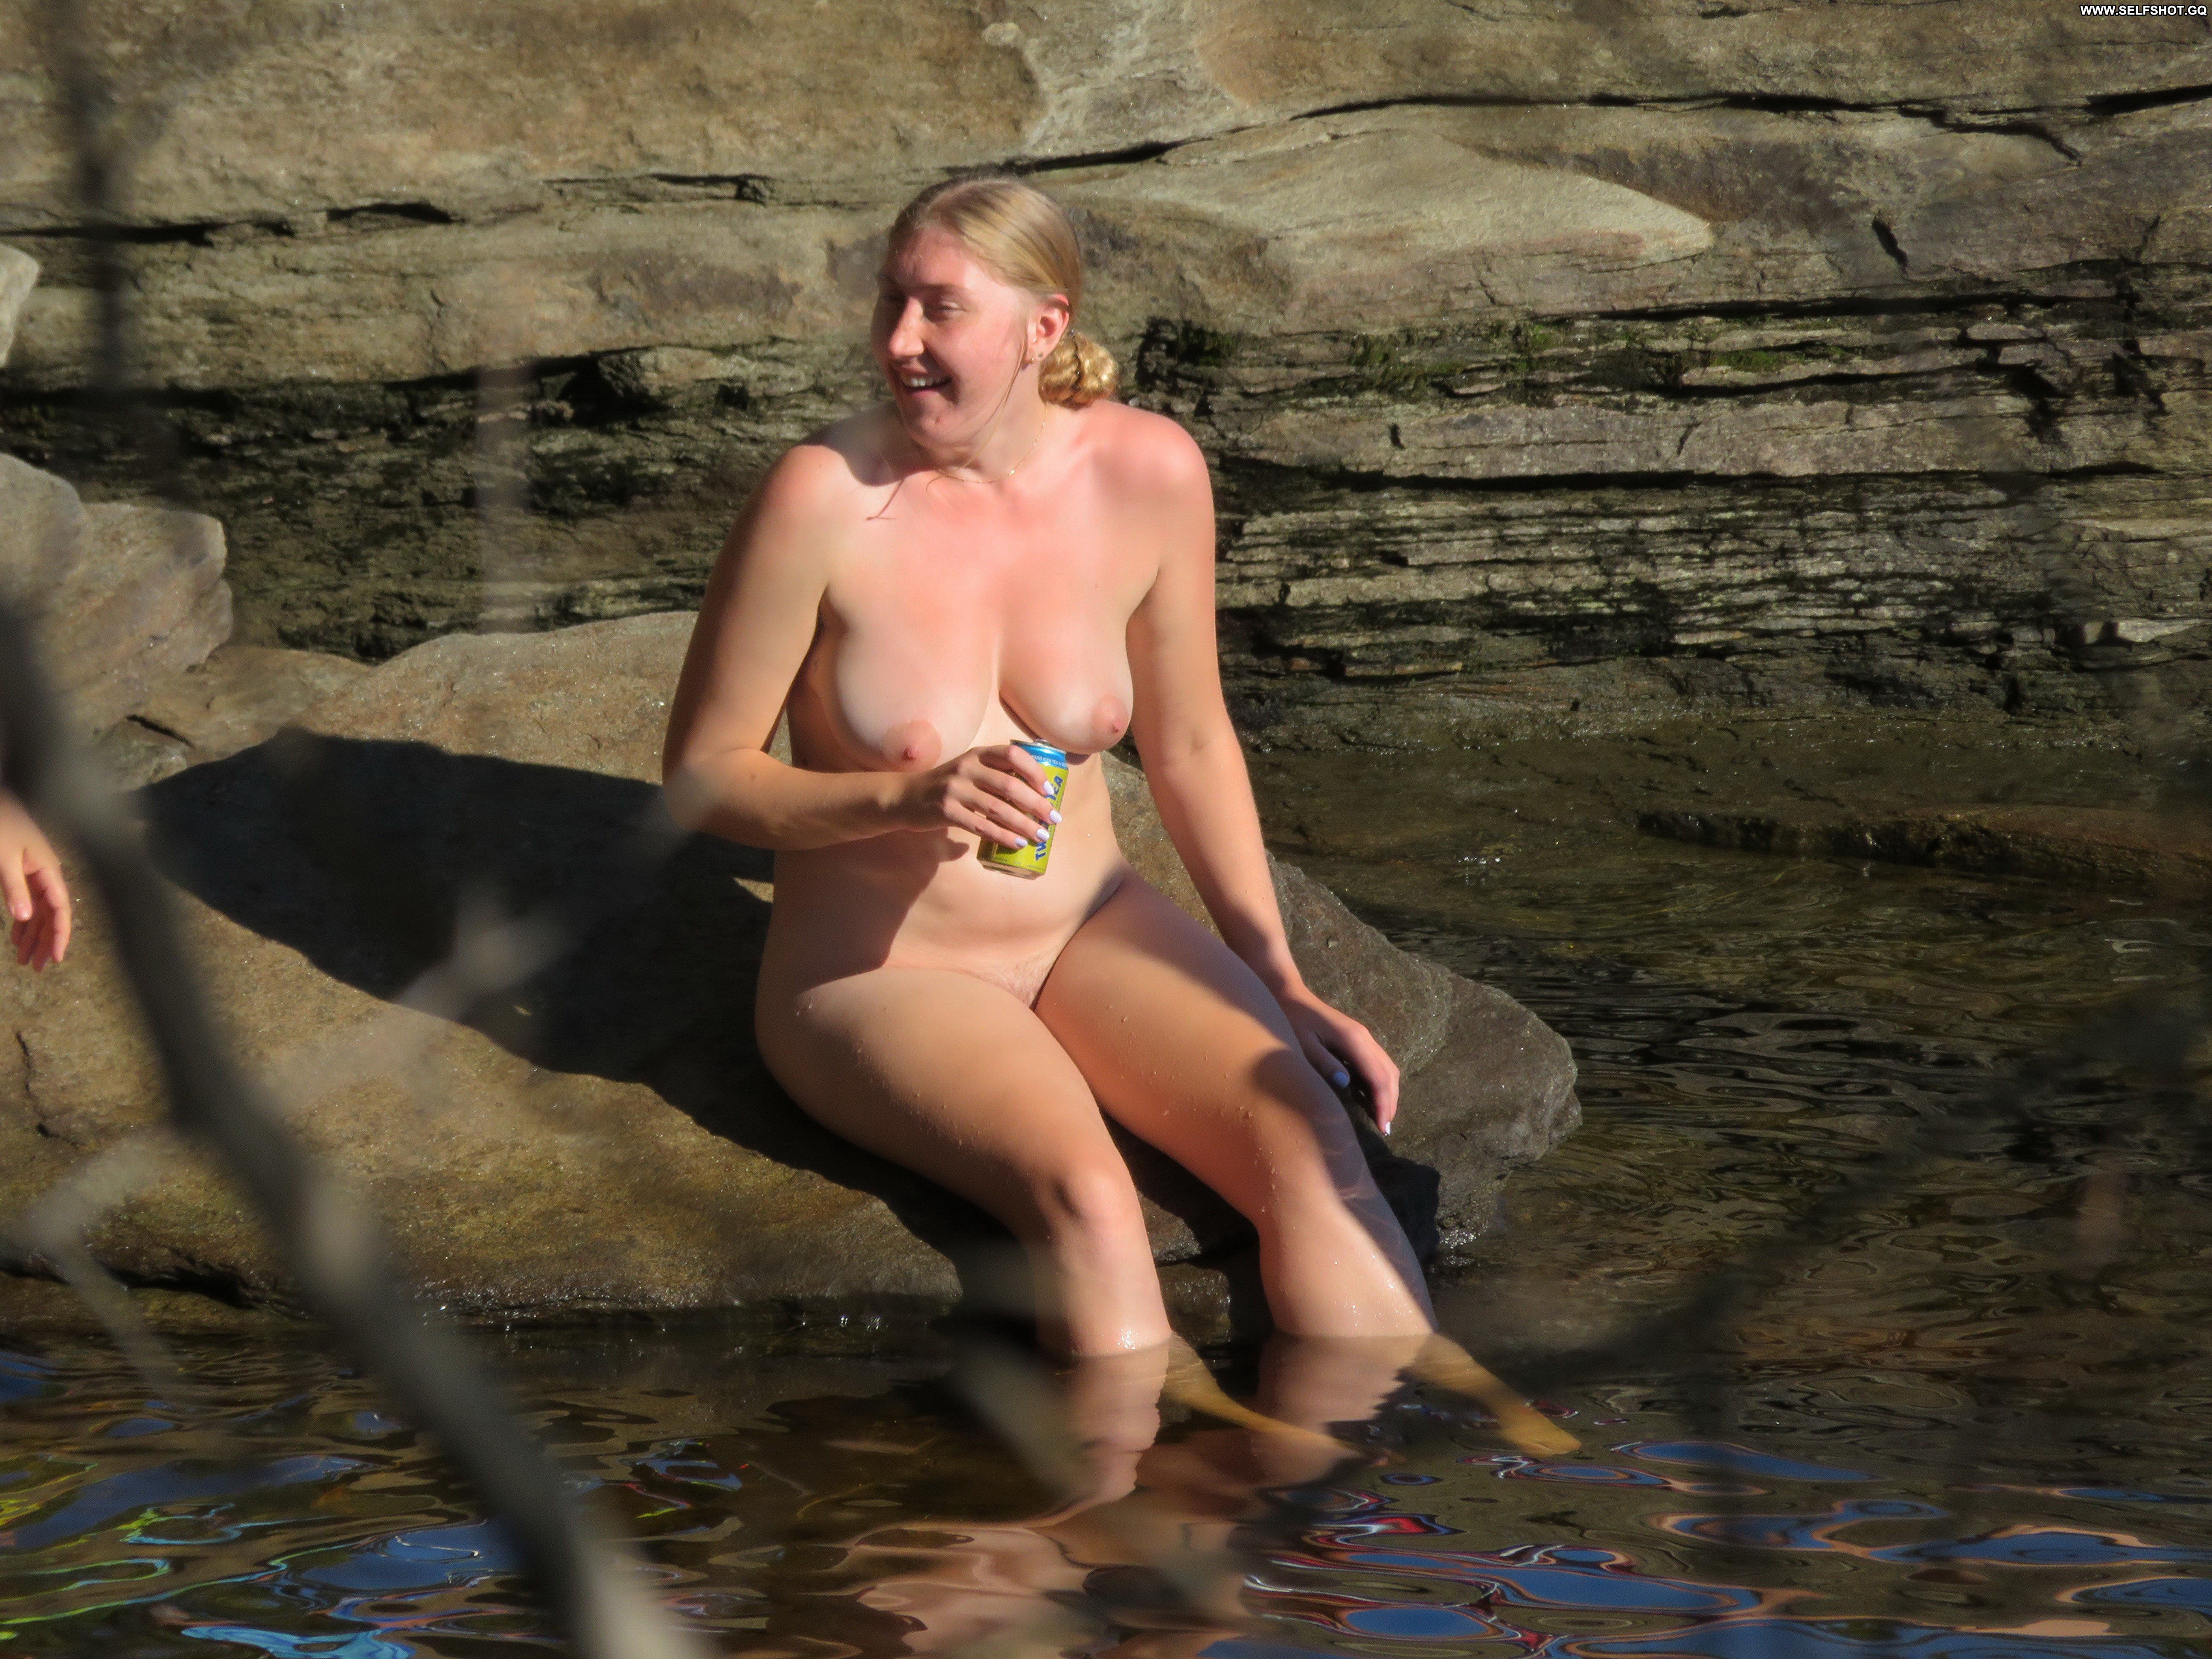 Leontine Public Girls Hot Nude Public Caught Pussy Nudity Lake